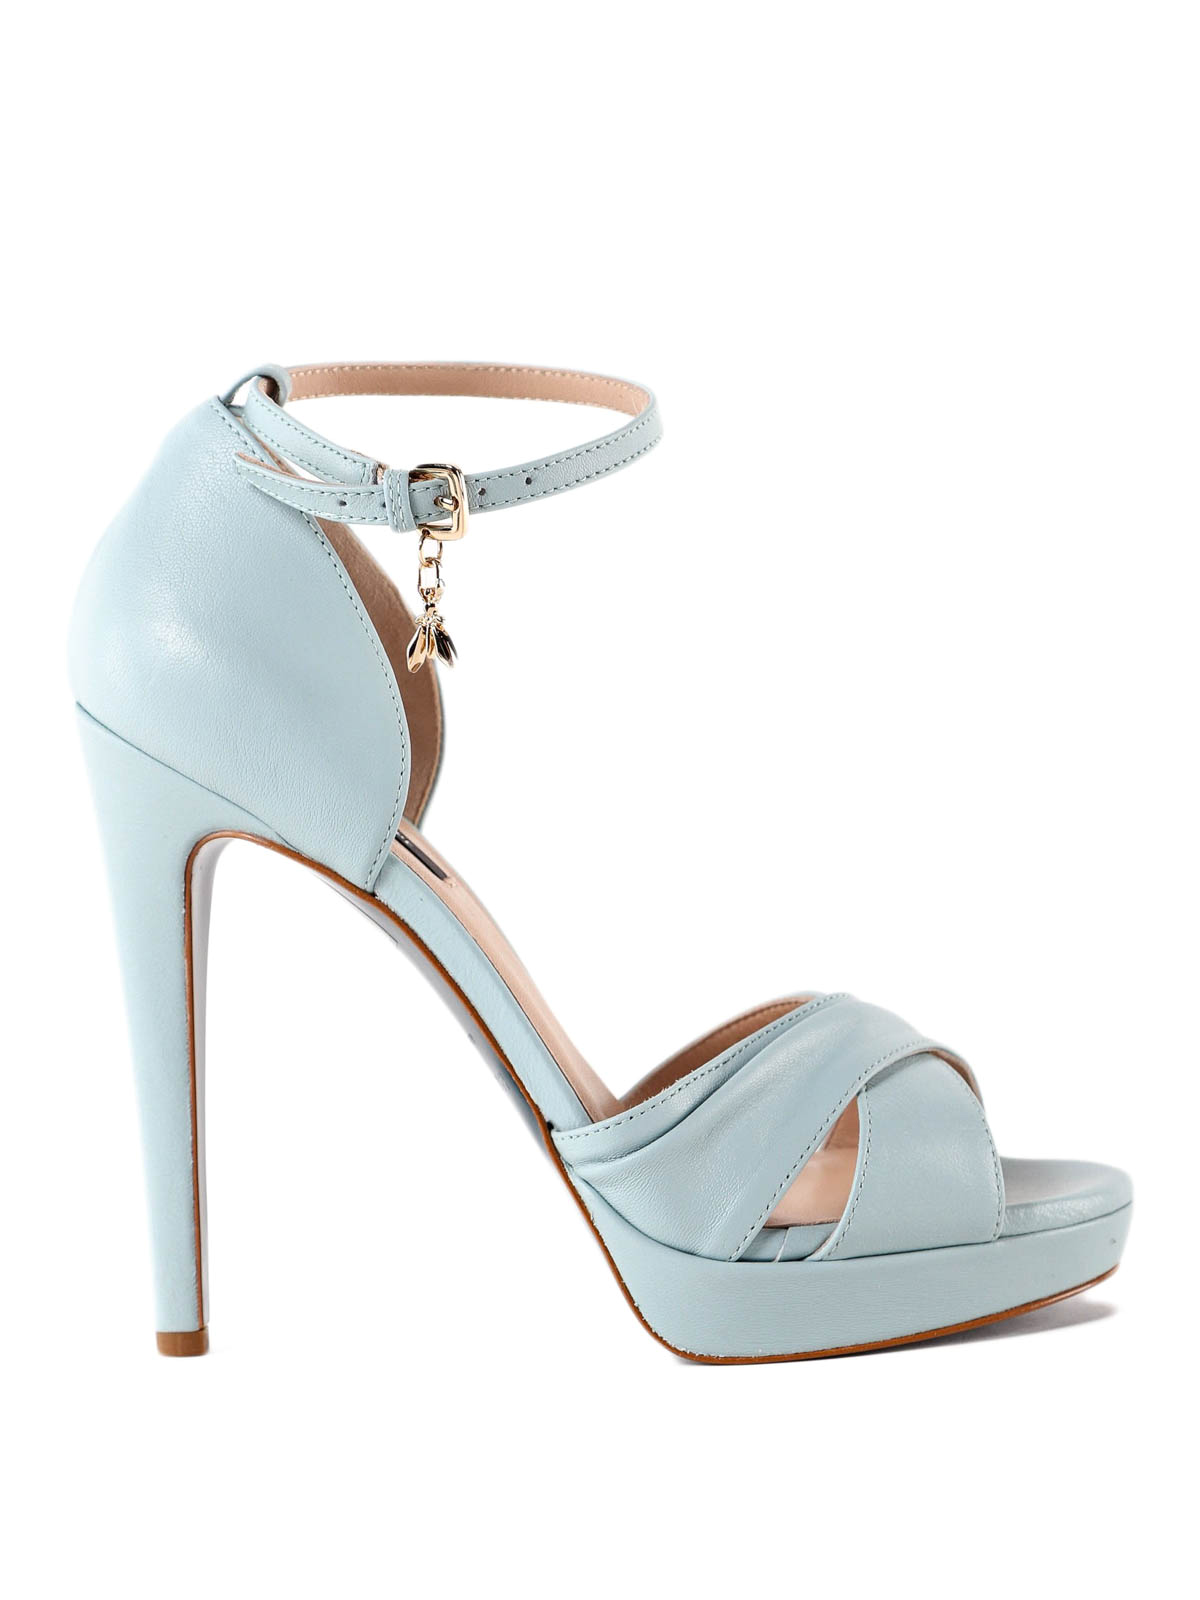 Patrizia Pepe - Light blue leather high sandals - sandals - 2V8486A3KWC743